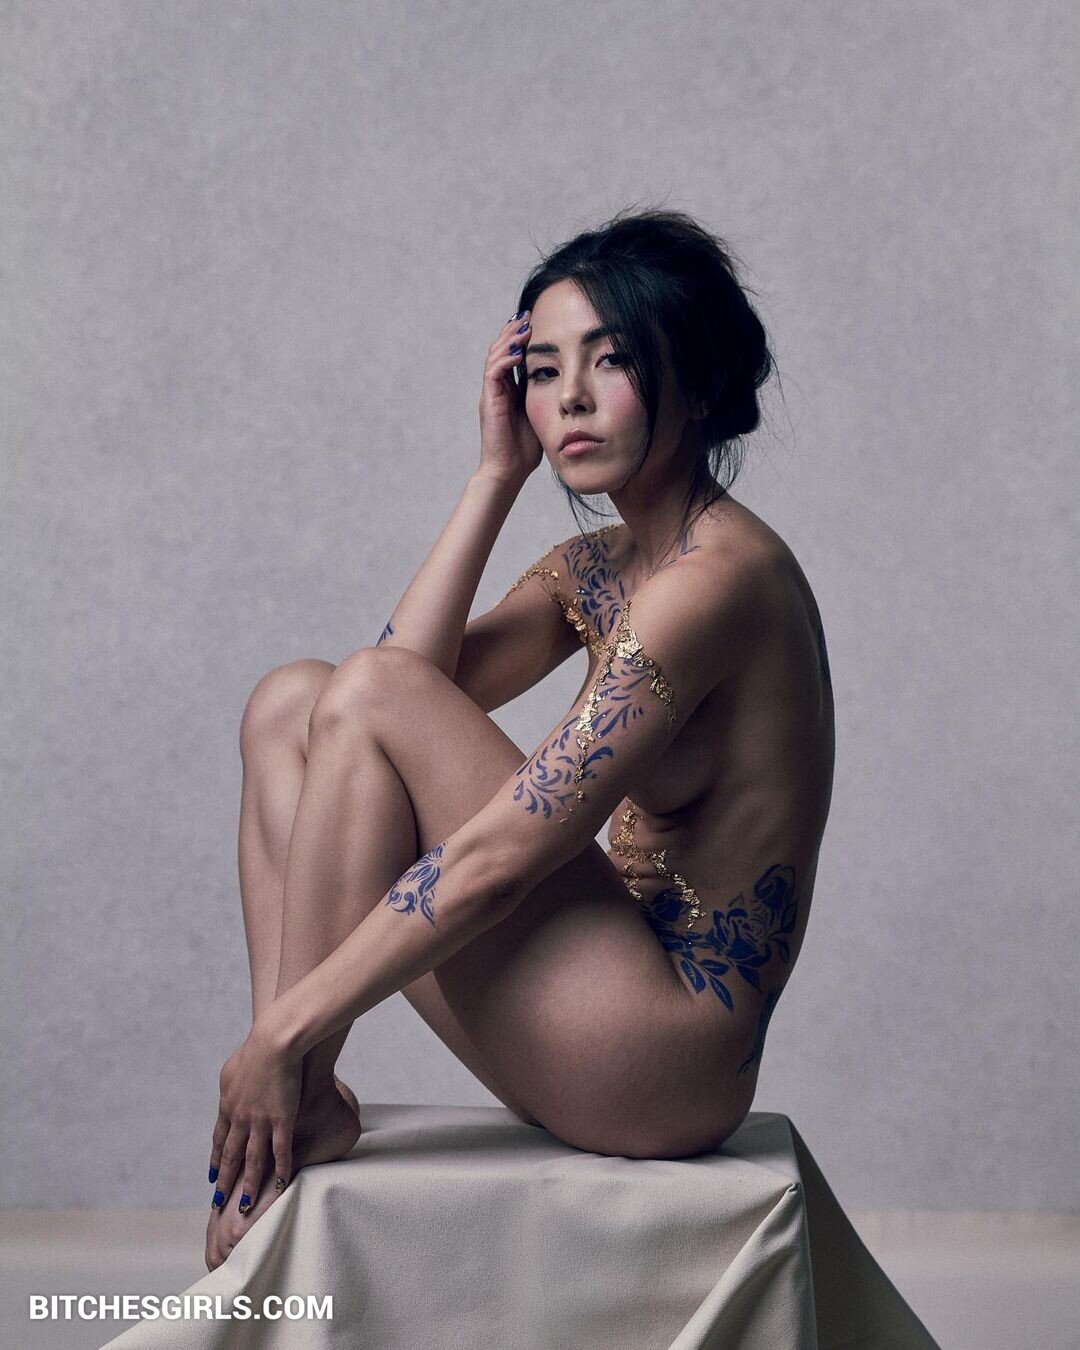 Maryland Nude Model Photography Groups - Anna Akana Instagram Nude Influencer - Annaakana